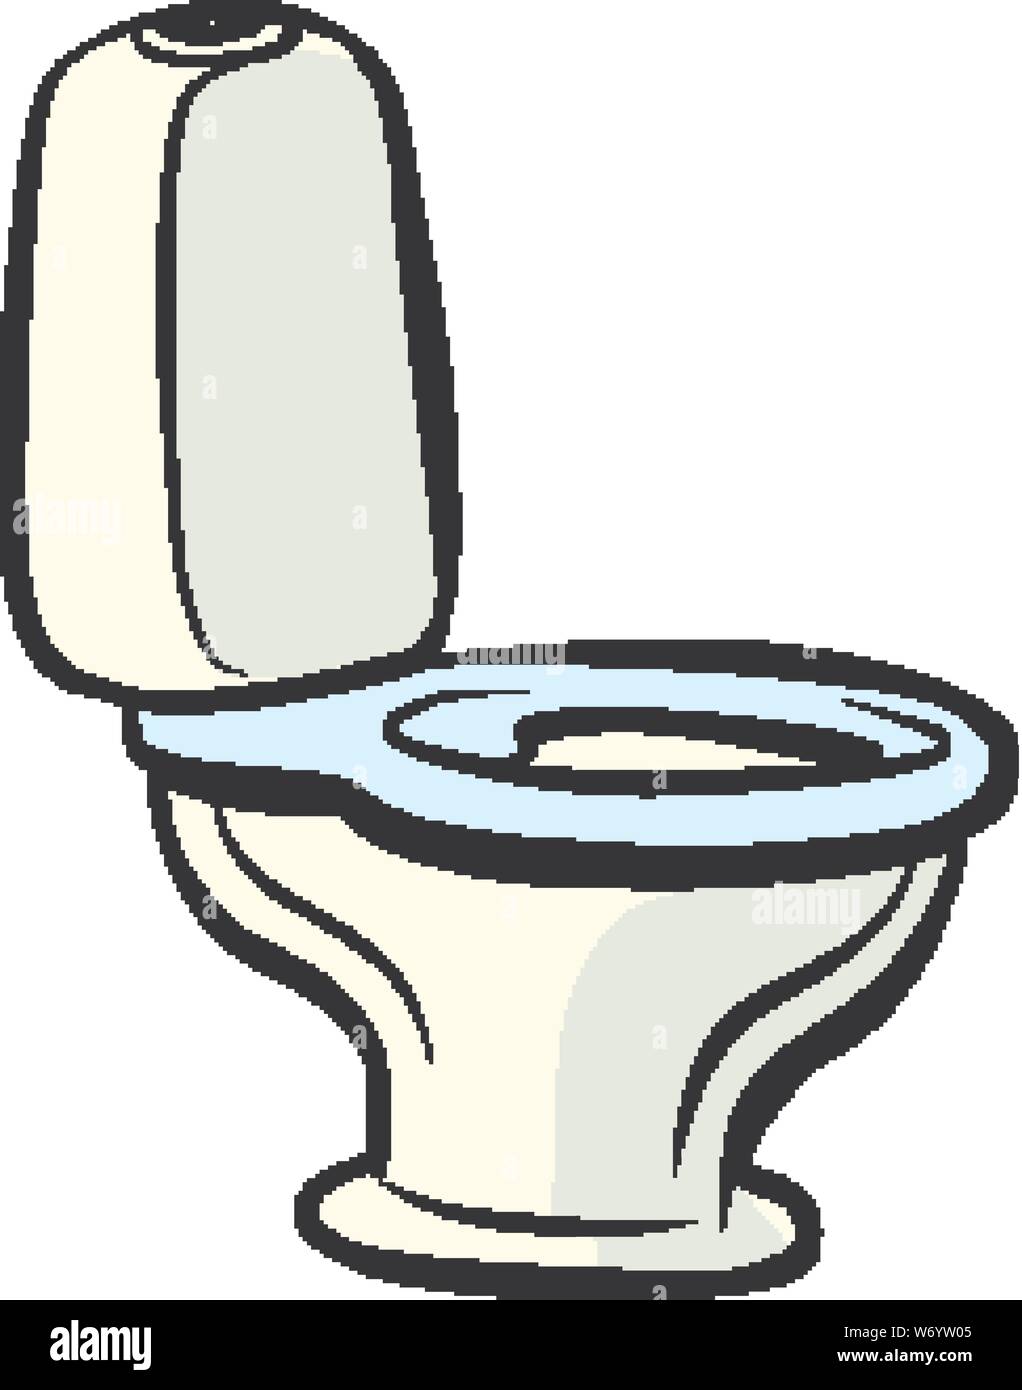 toilet home plumbing. Pop art retro vector illustration drawing Stock Vector